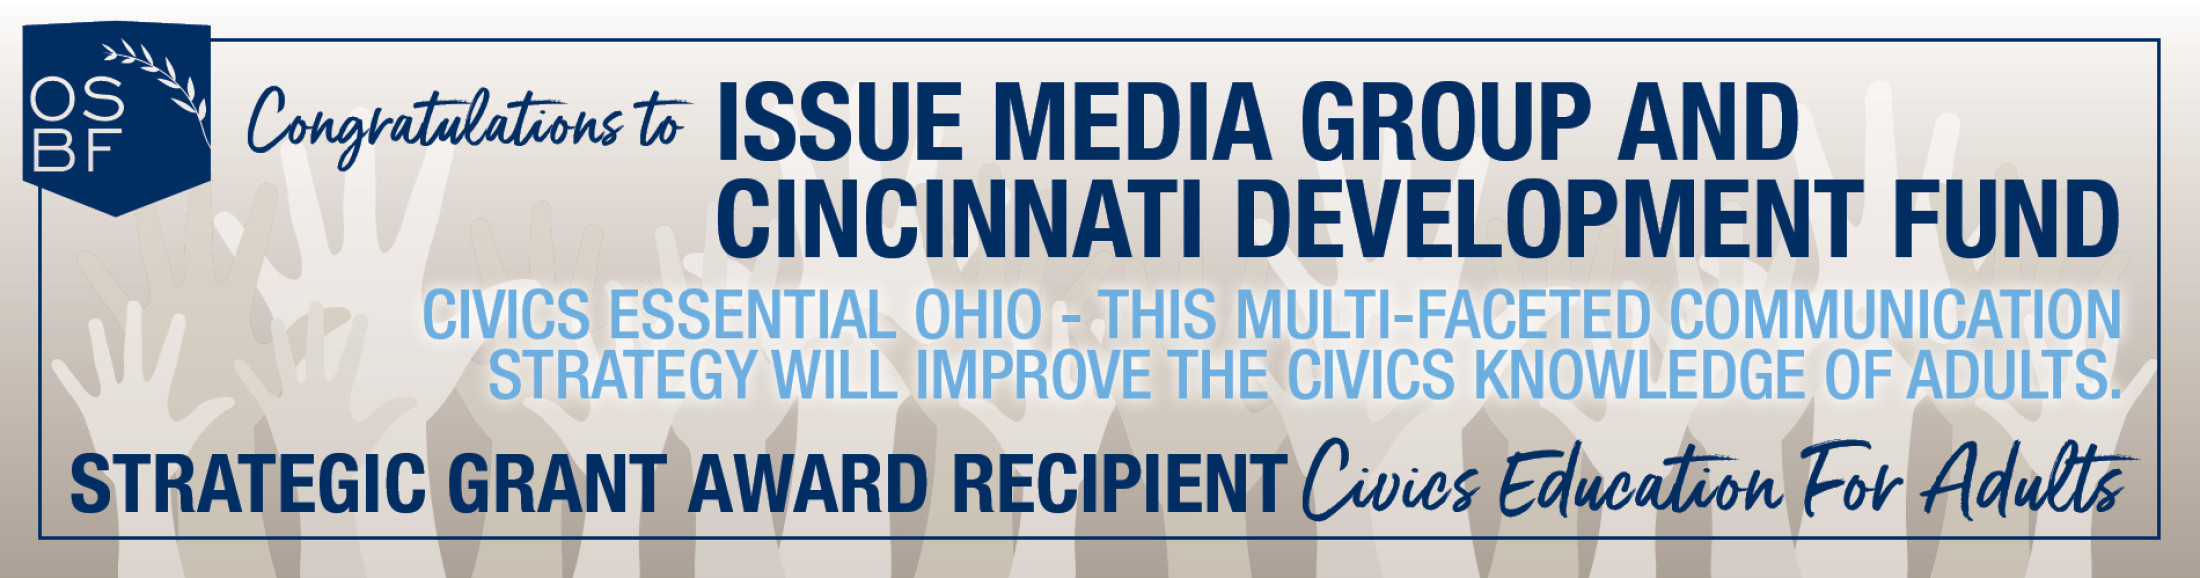 Issue Media Group And Cincinnati Development Fund Award Banner